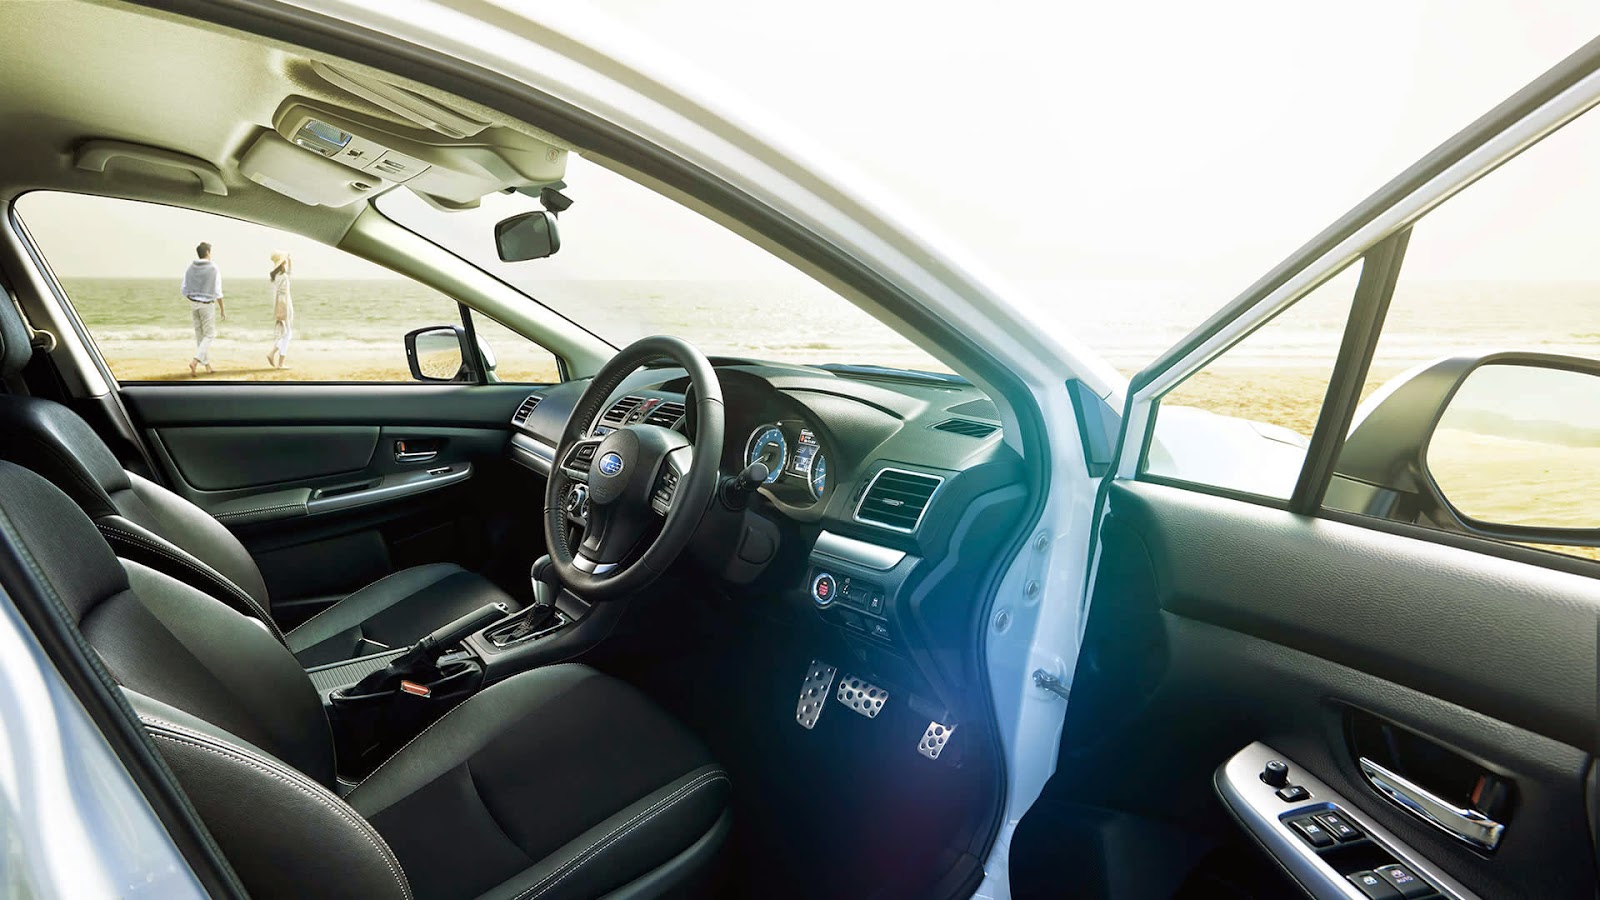 Leopaul S Blog Subaru Impreza Sport And G4 2015 Minor Change